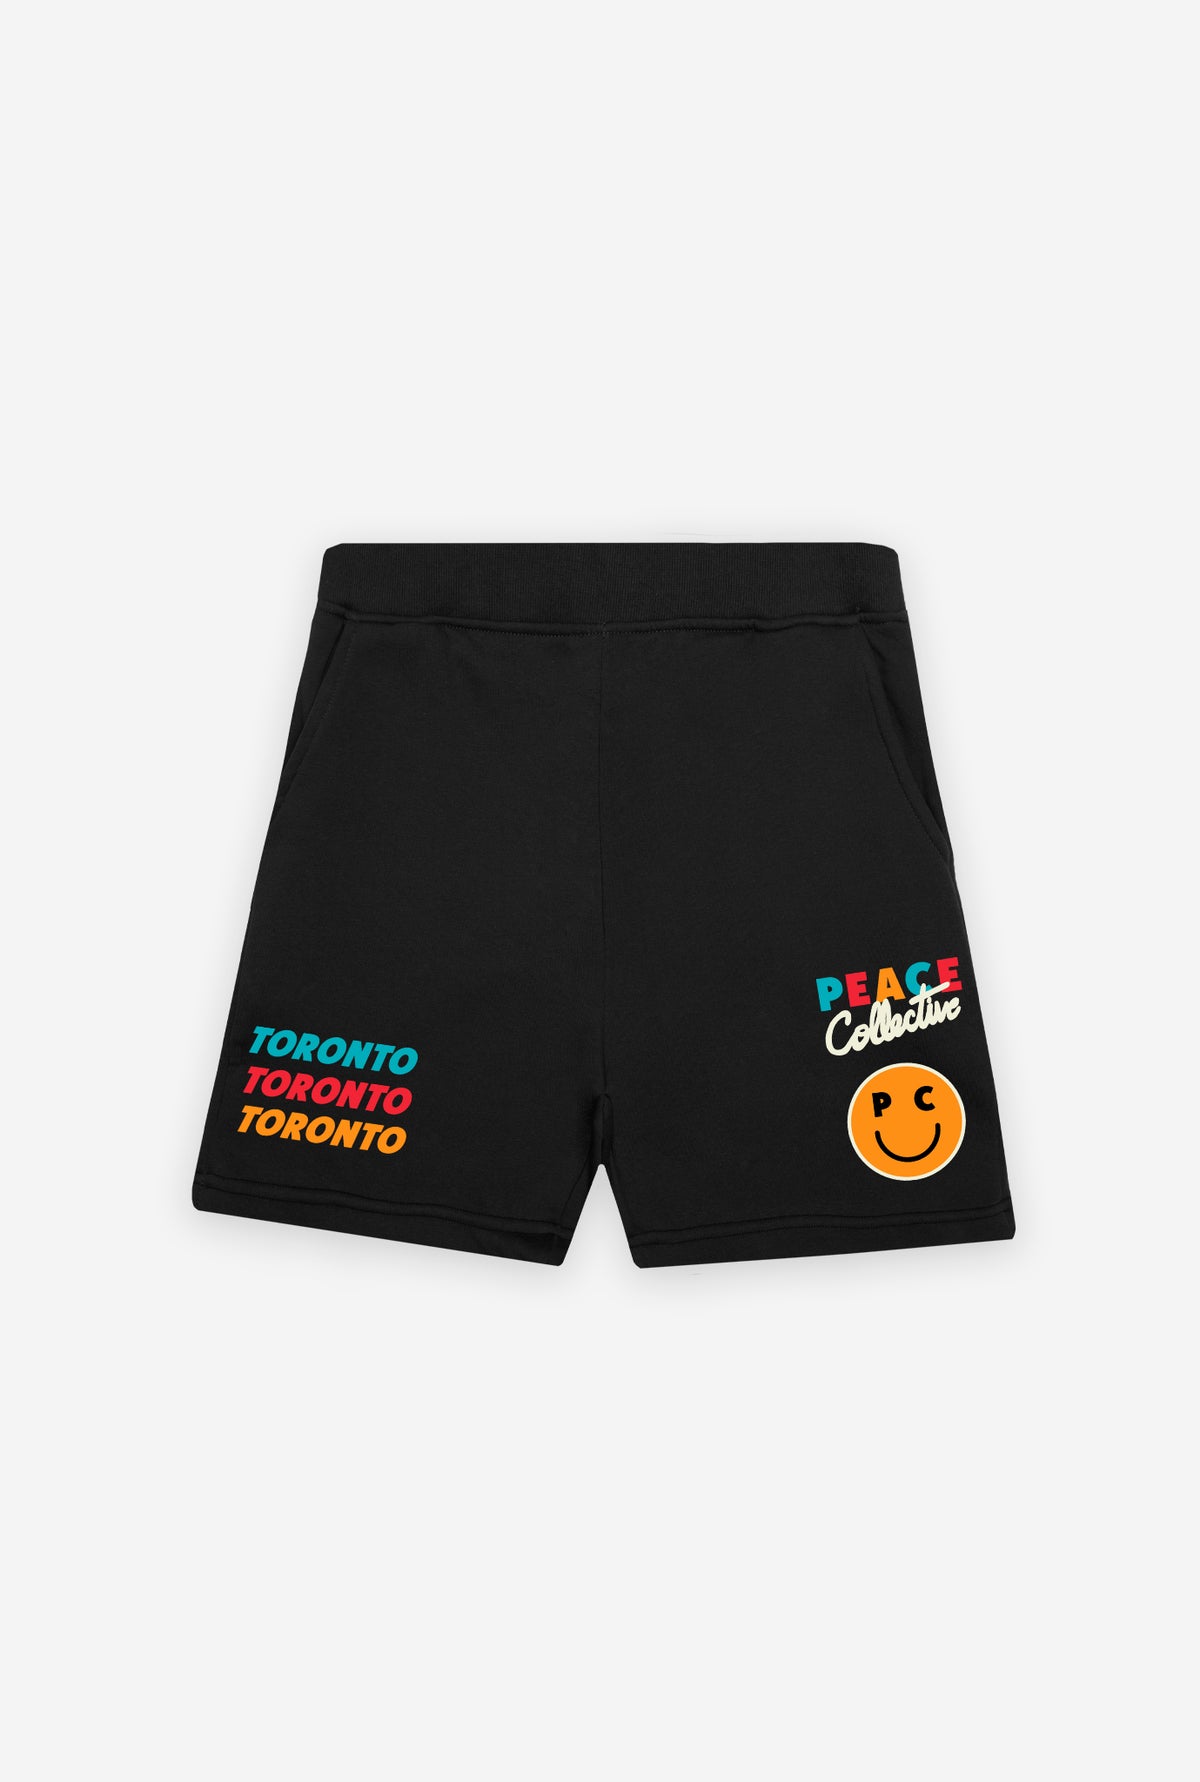 Toronto Smiley Shorts - Black